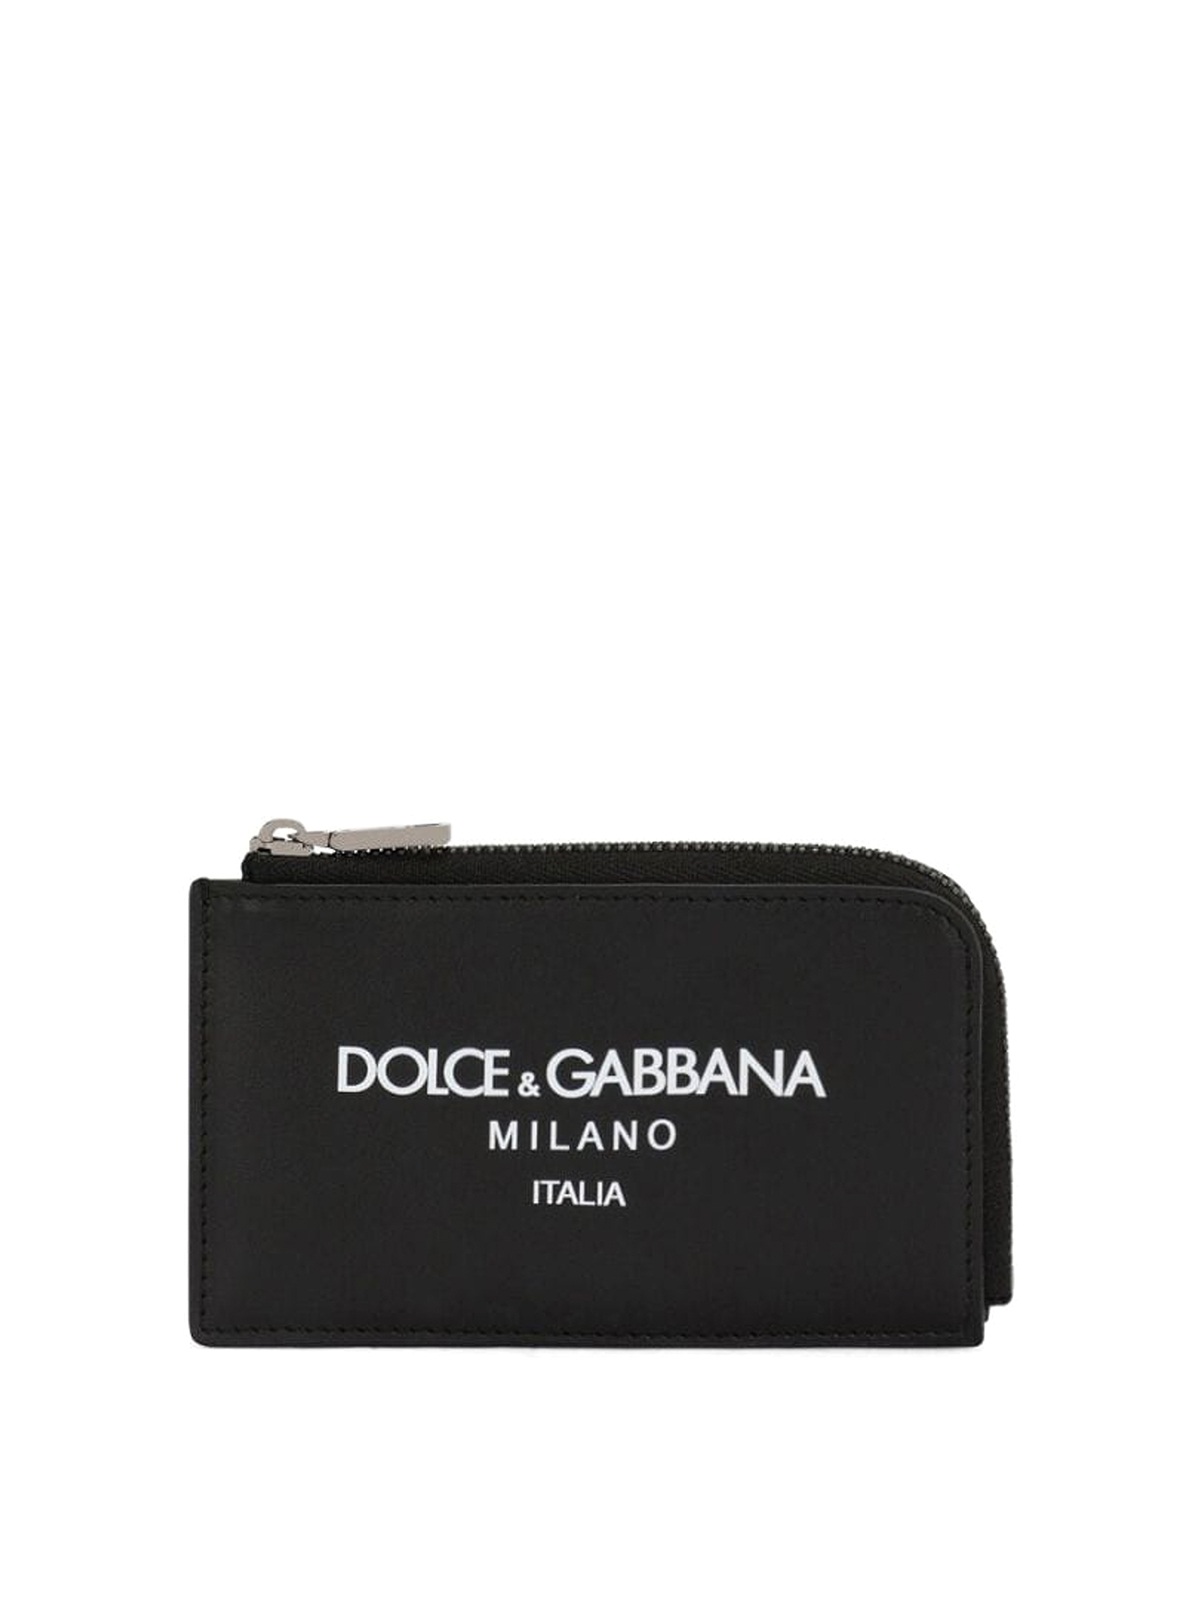 Dolce & Gabbana Bolsa Bandolera - Rosado Claro In Light Pink